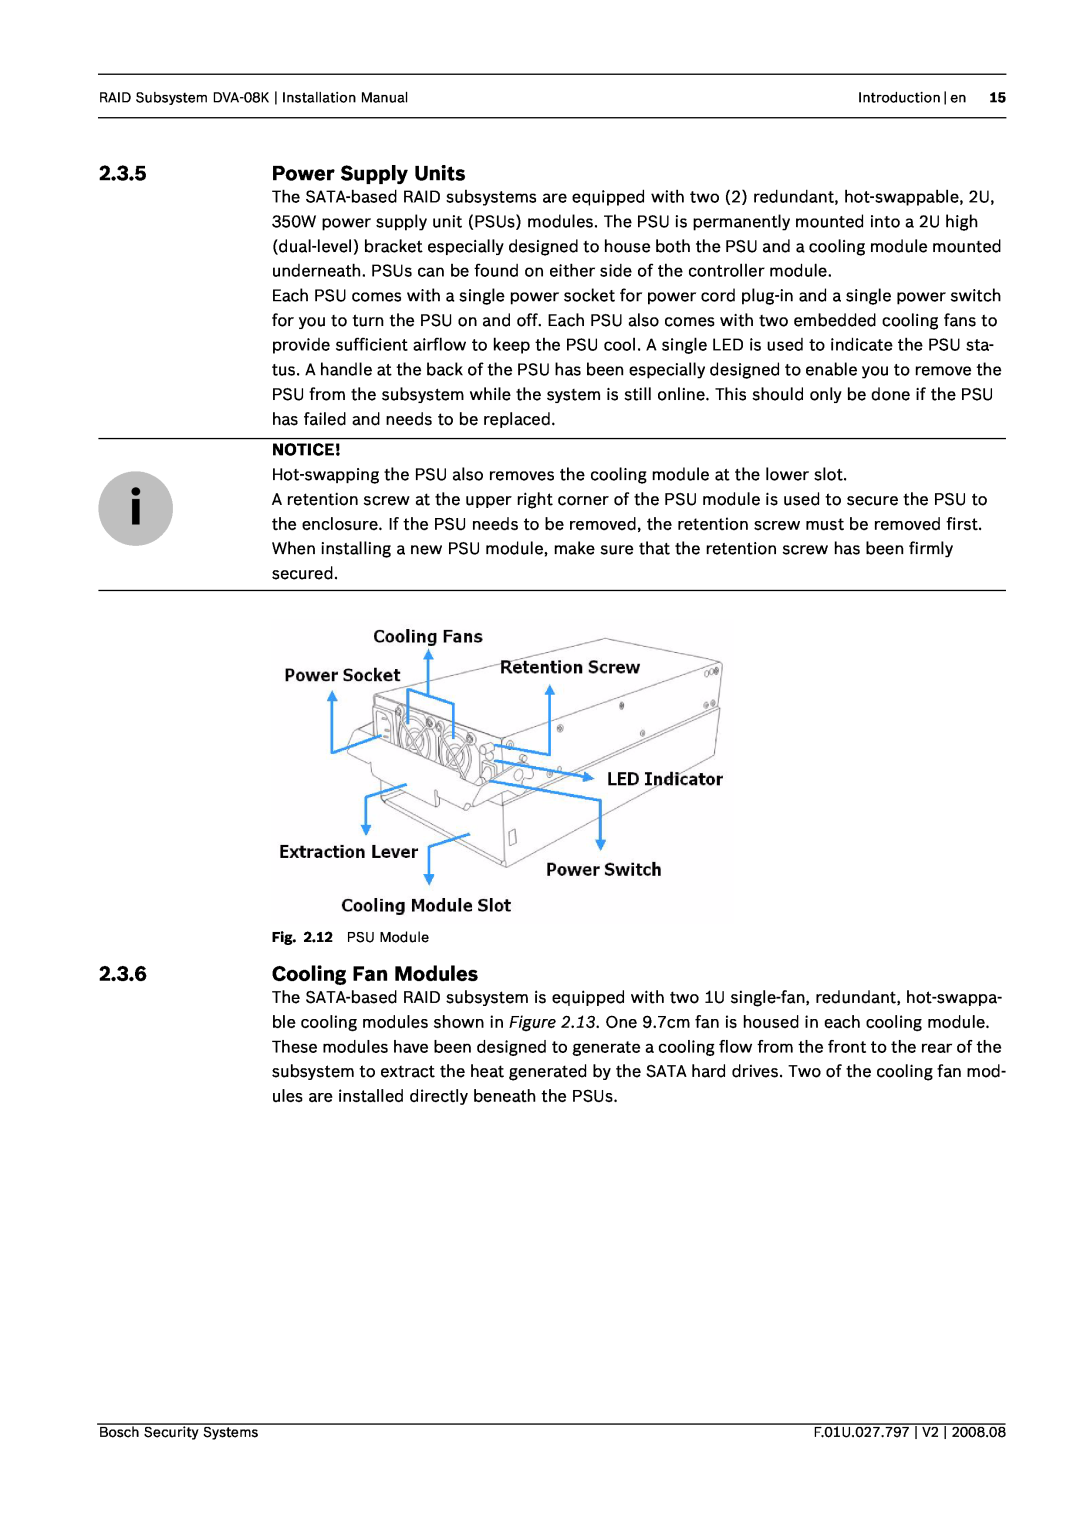 Bosch Appliances DVA-08K manual 2.3.5, Power Supply Units, 2.3.6, Cooling Fan Modules, 12 PSU Module 